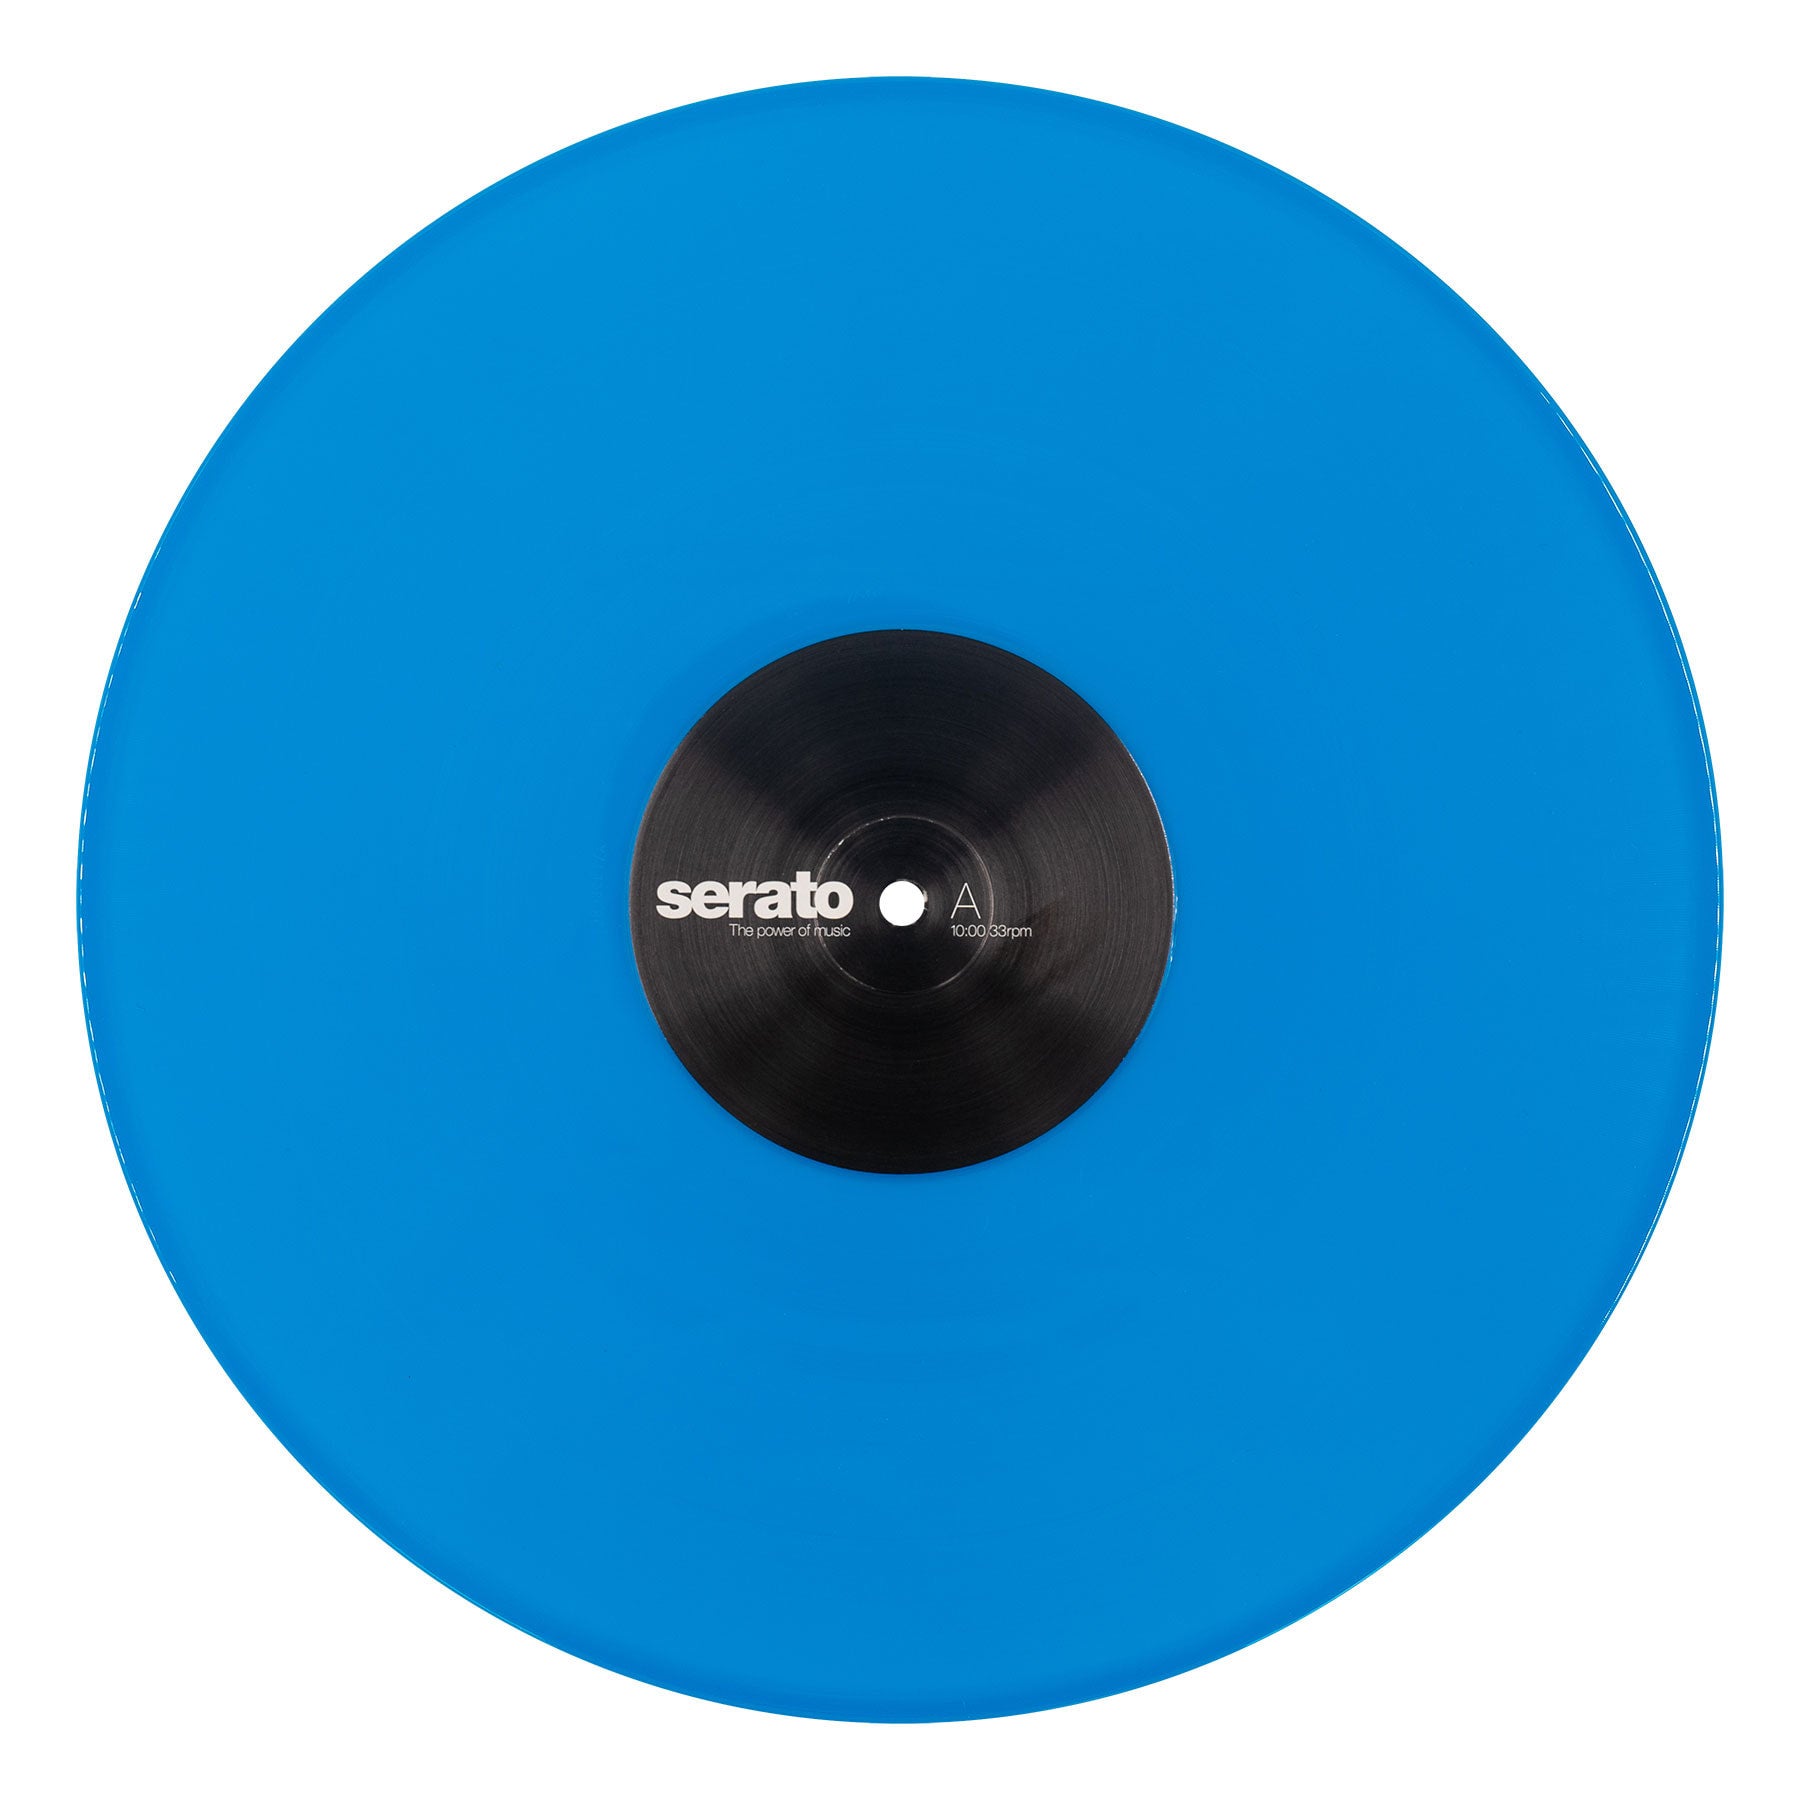 Serato 7-Inch Vinyl Performance Series Glow in the Dark (Pair)